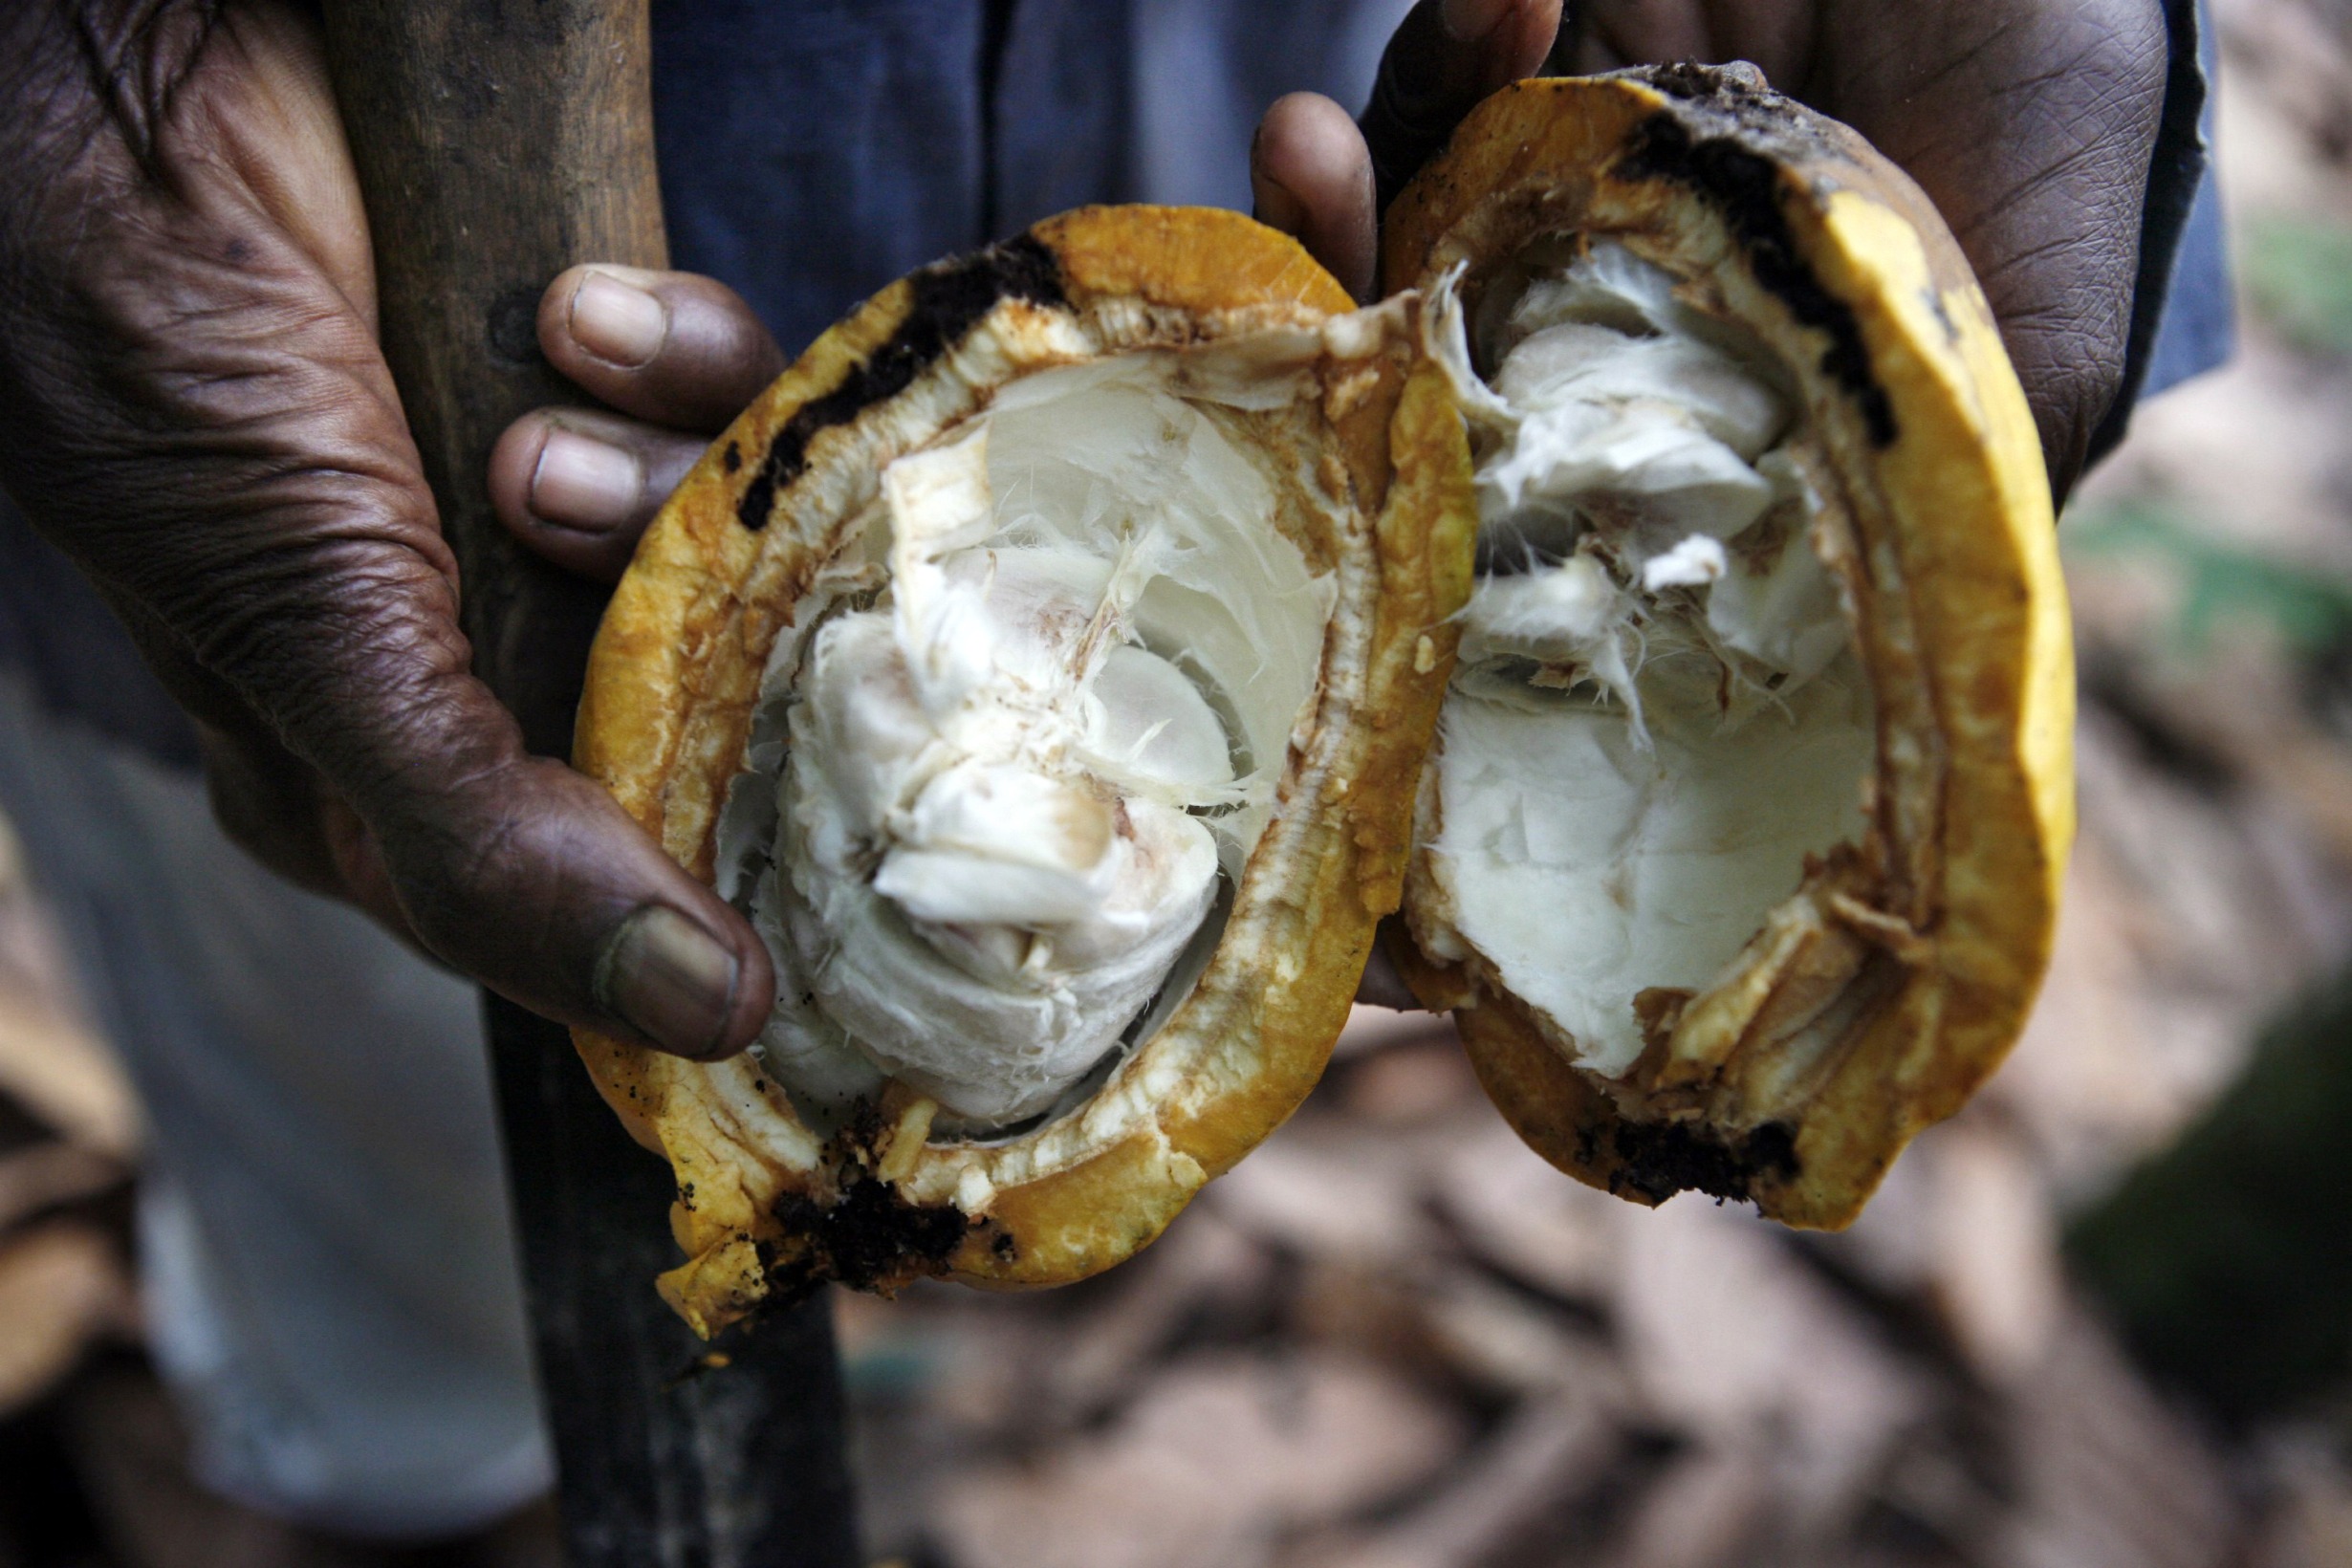 A farmer holds an open, ripe cocoa pod on a farm outside of Kumasi, Ghana.